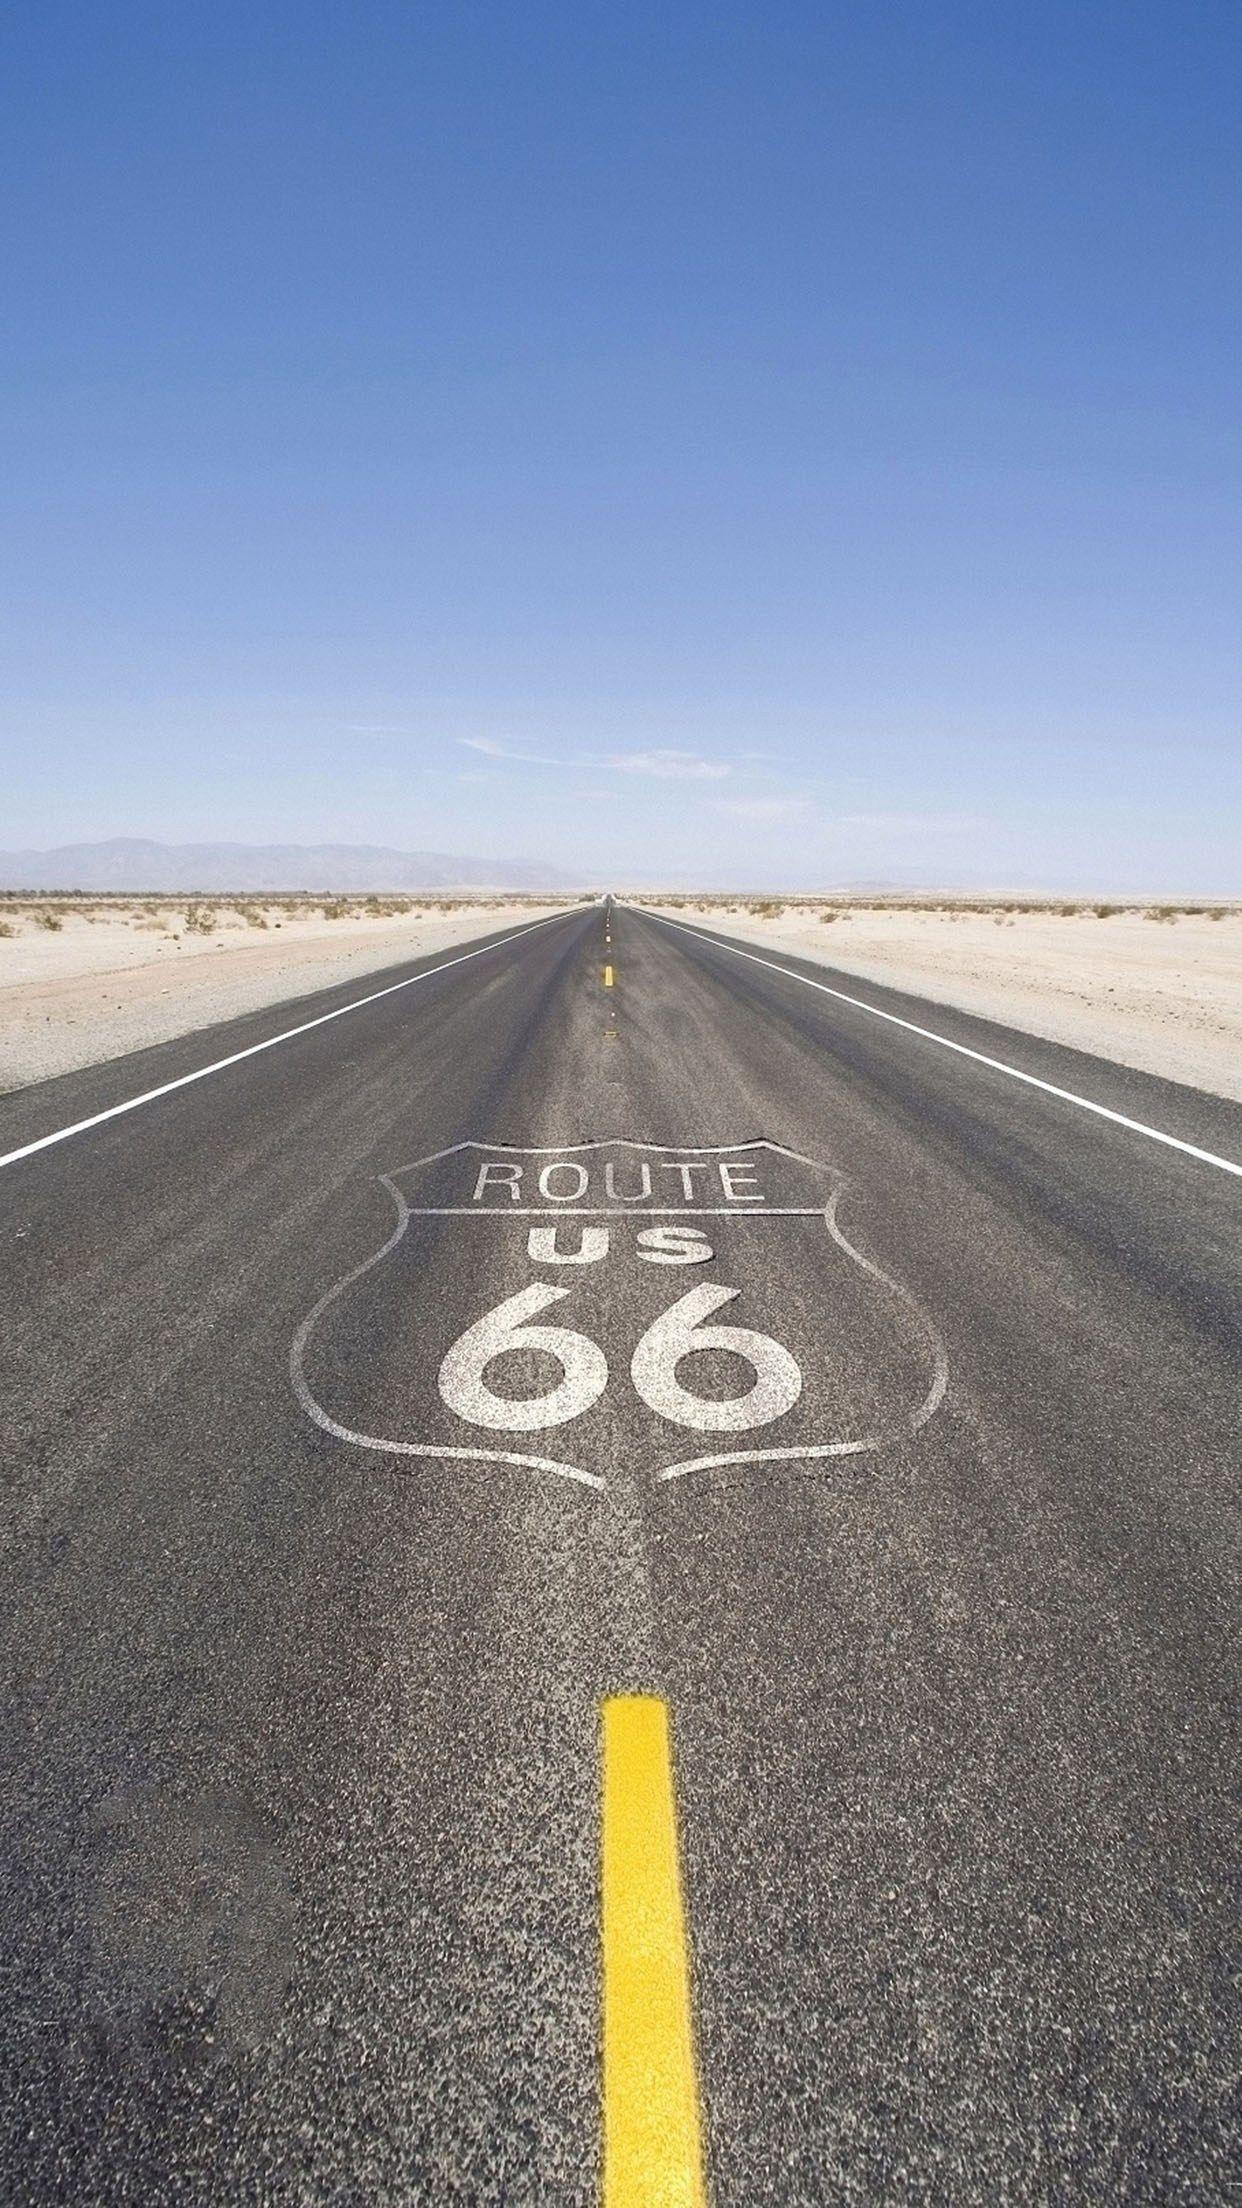 Route 66 Desktop Wallpapers - Top Free Route 66 Desktop ...